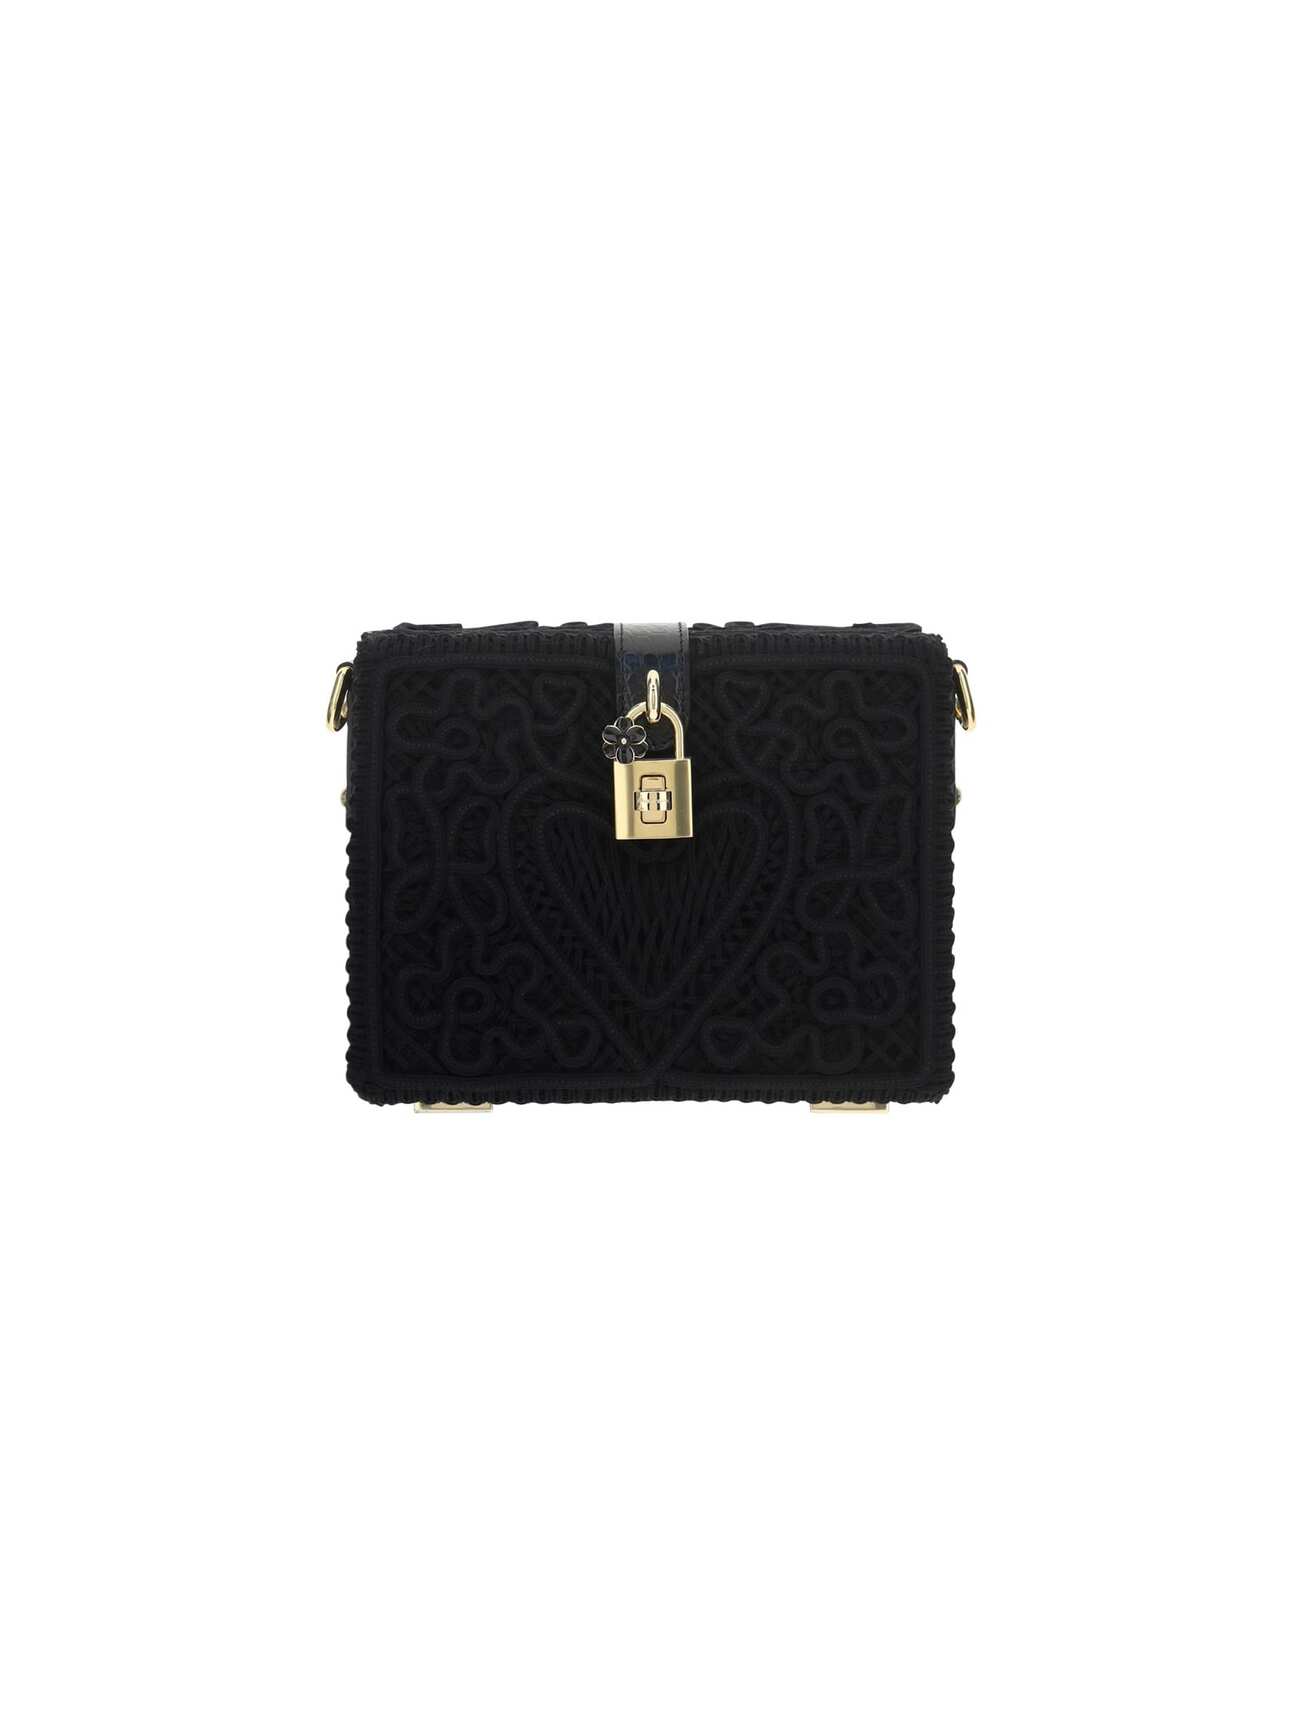 Dolce & Gabbana Cordonetto Handbag in nero